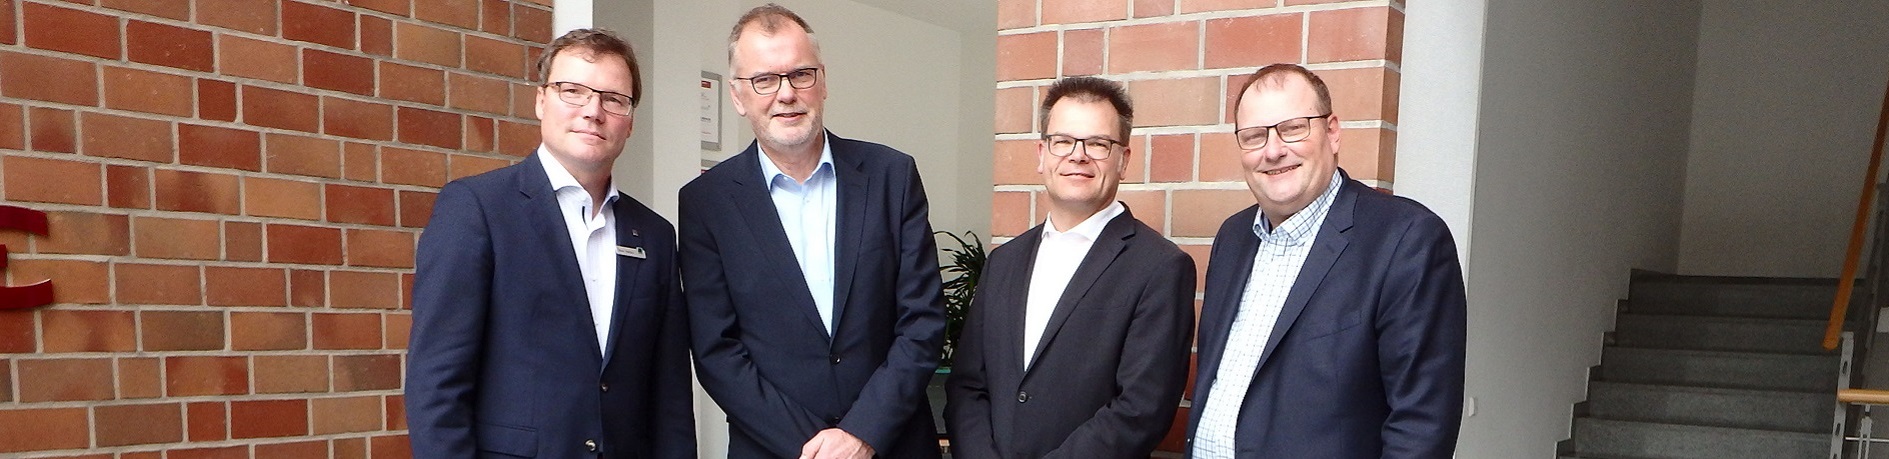 Bechtle GmbH Köln und Comline AG Dortmund schließen Partnerschaft